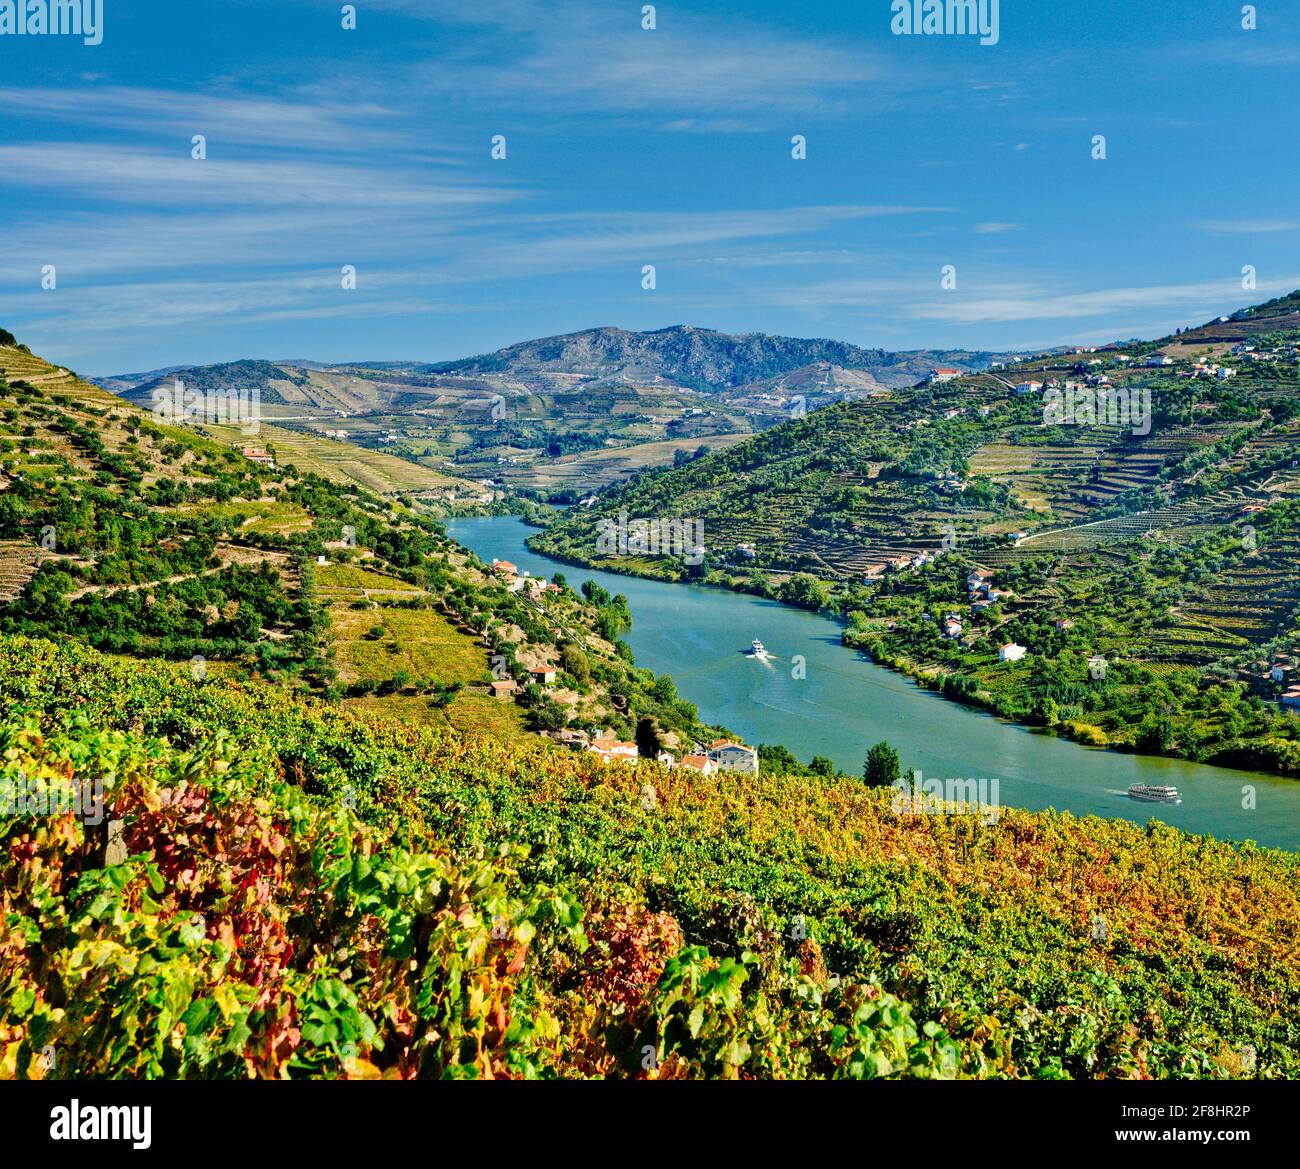 Les vignobles de la vallée du Douro près de Peso da Regua Banque D'Images